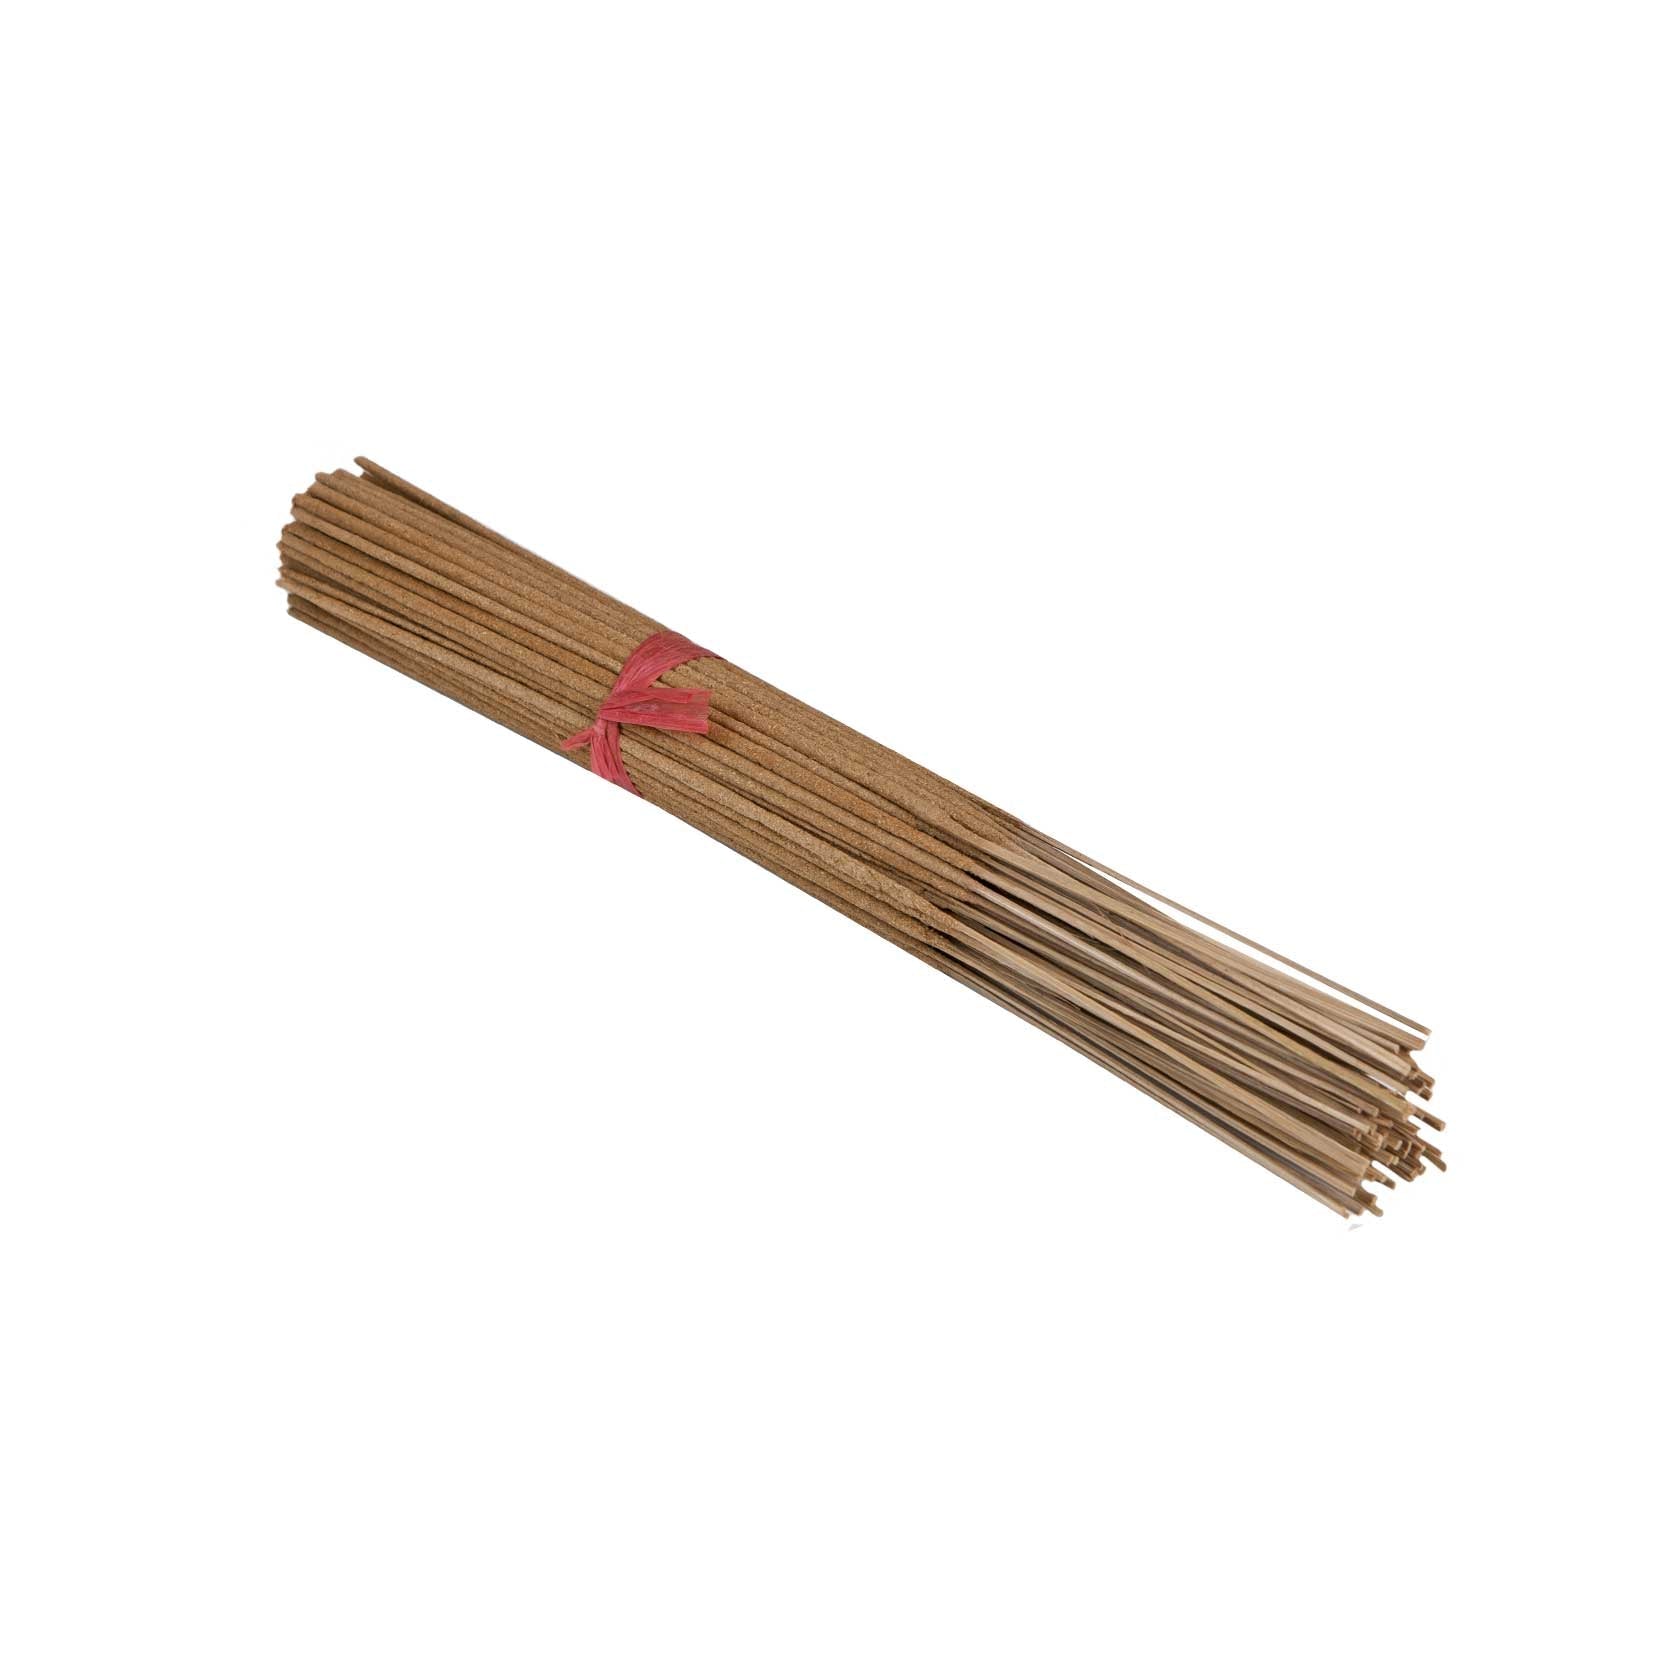 100 pc 10 Inch Incense Sticks - Mosquito Sticks - Punks